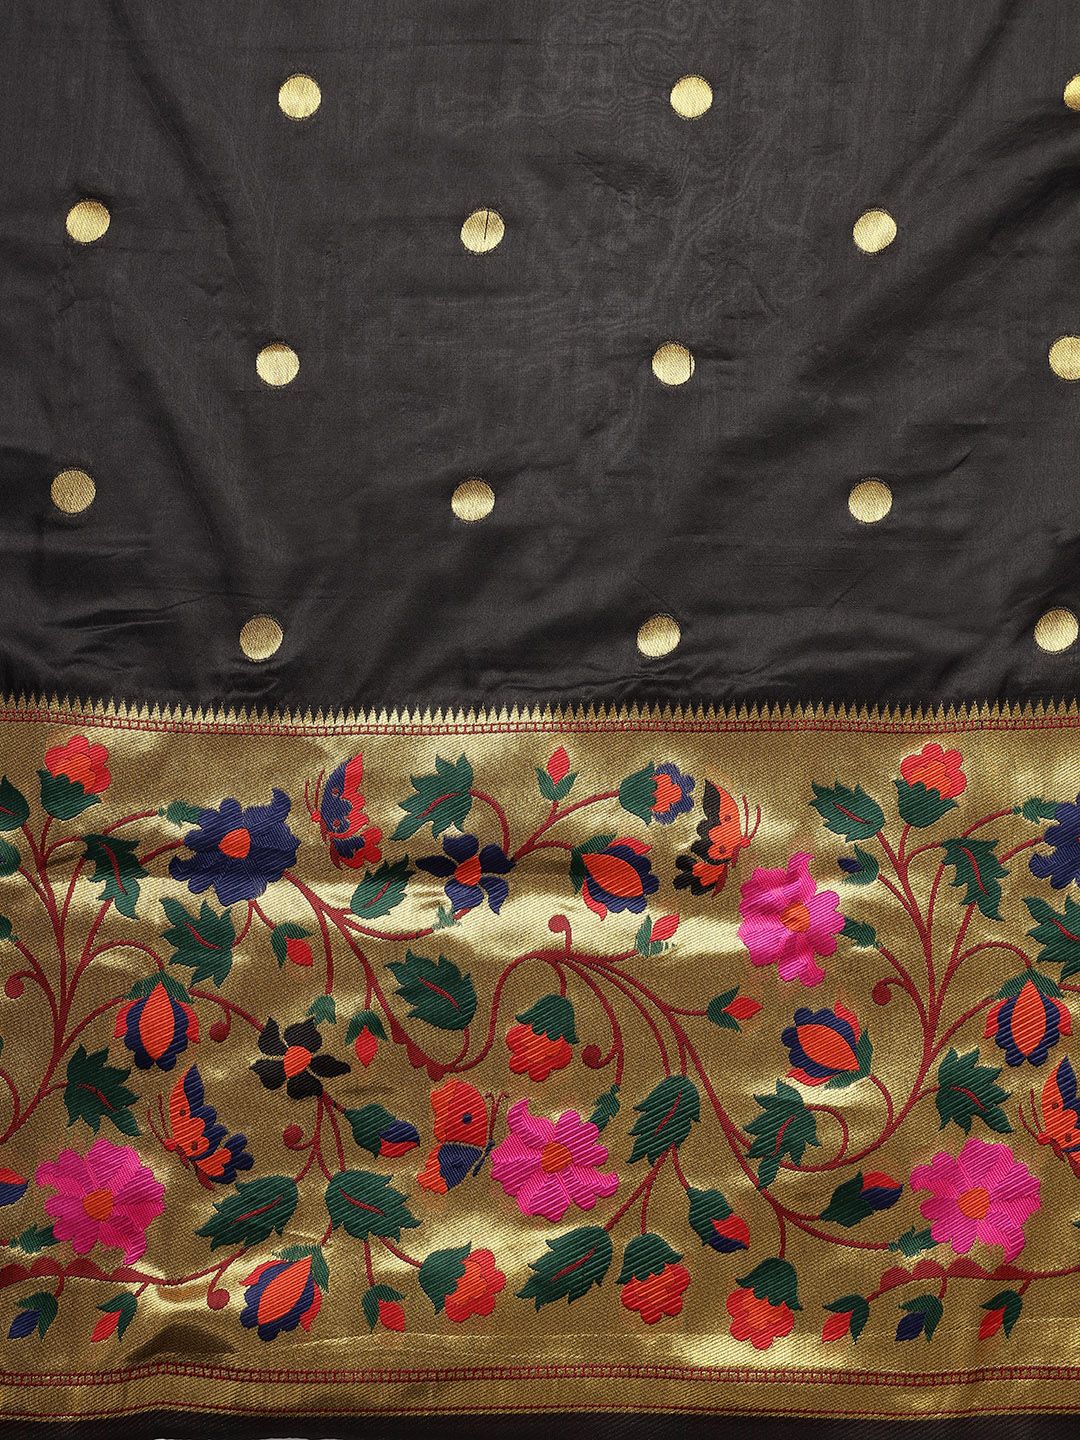 Black color maharani paithani saree for woman